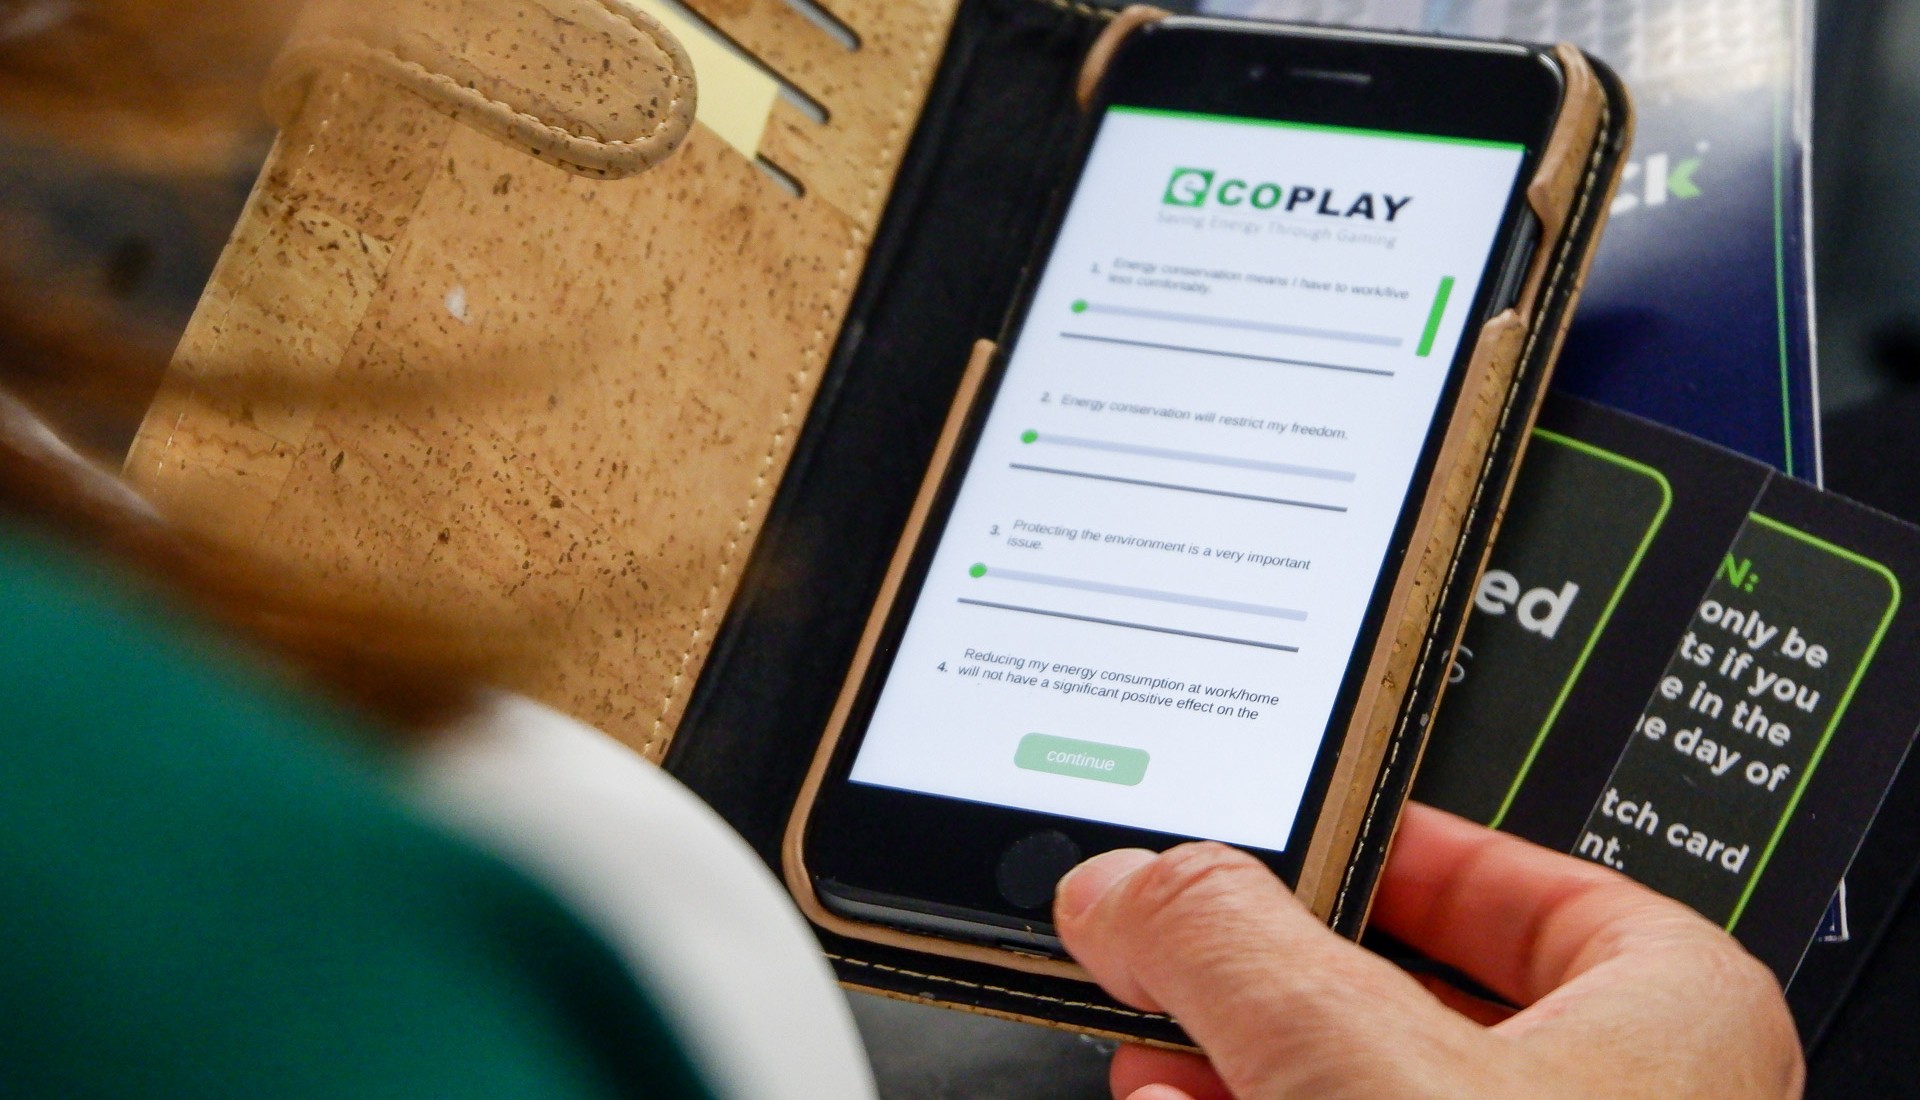 ecoplay:-feedback-app-was-launched-at-inesc-tec